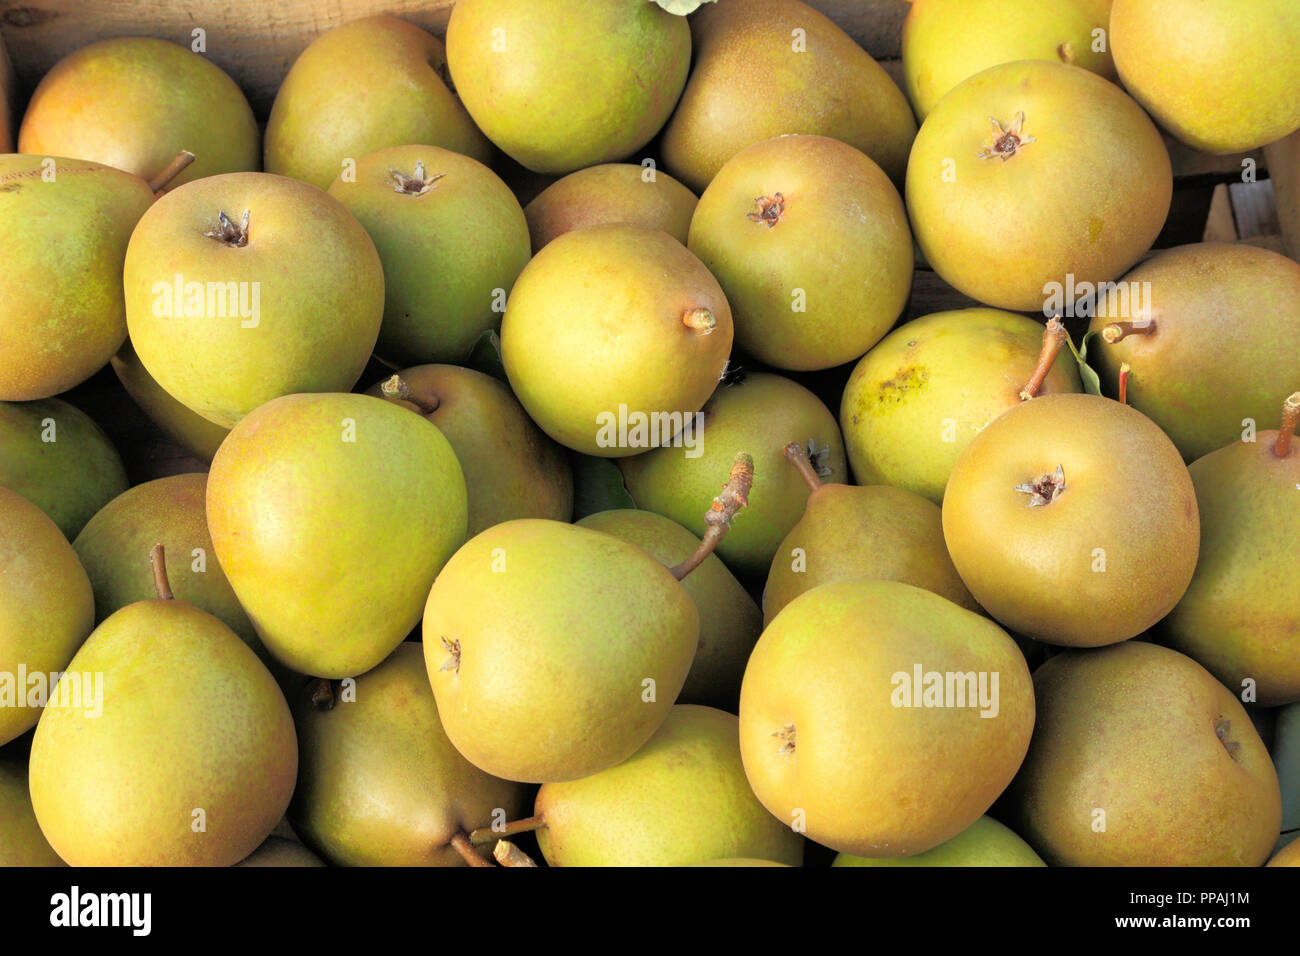 Apple, Beurre Hardy, apples, farm shop display, malus domestica, edible, fruit Stock Photo